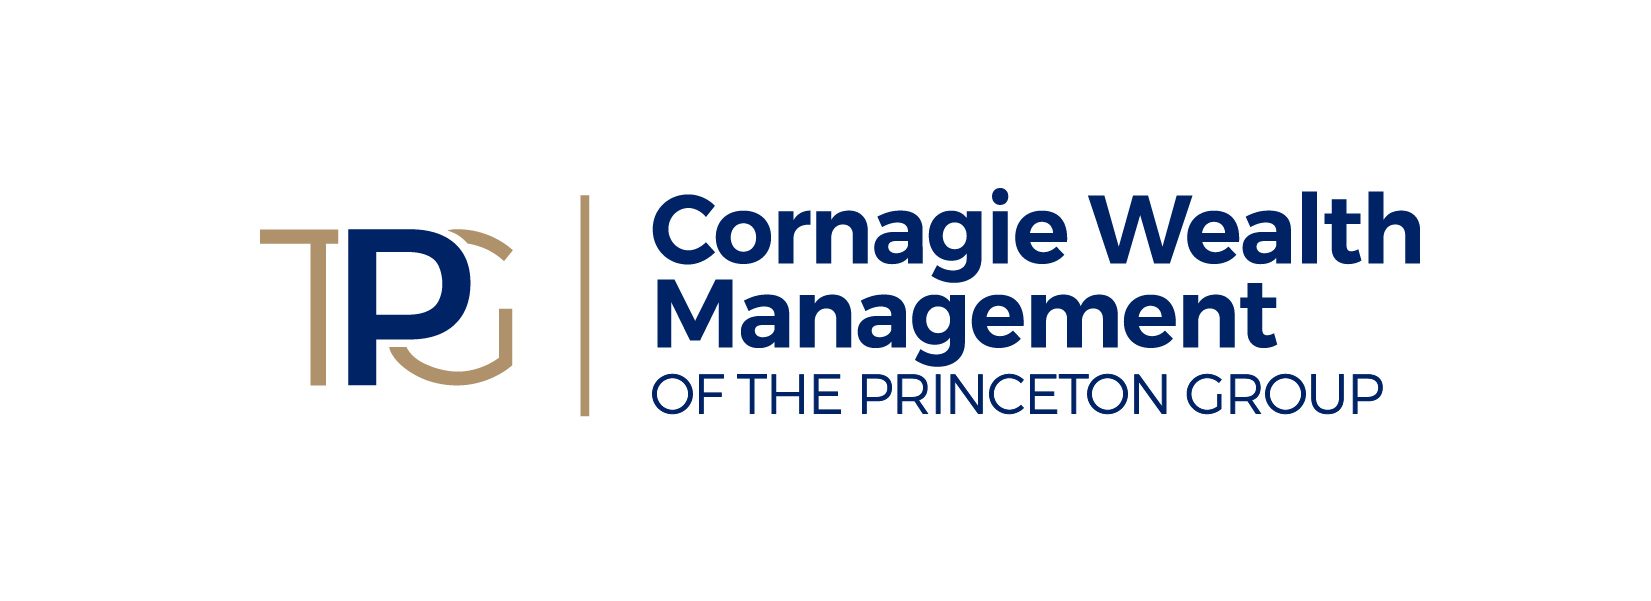 Cornagie Wealth Management logo